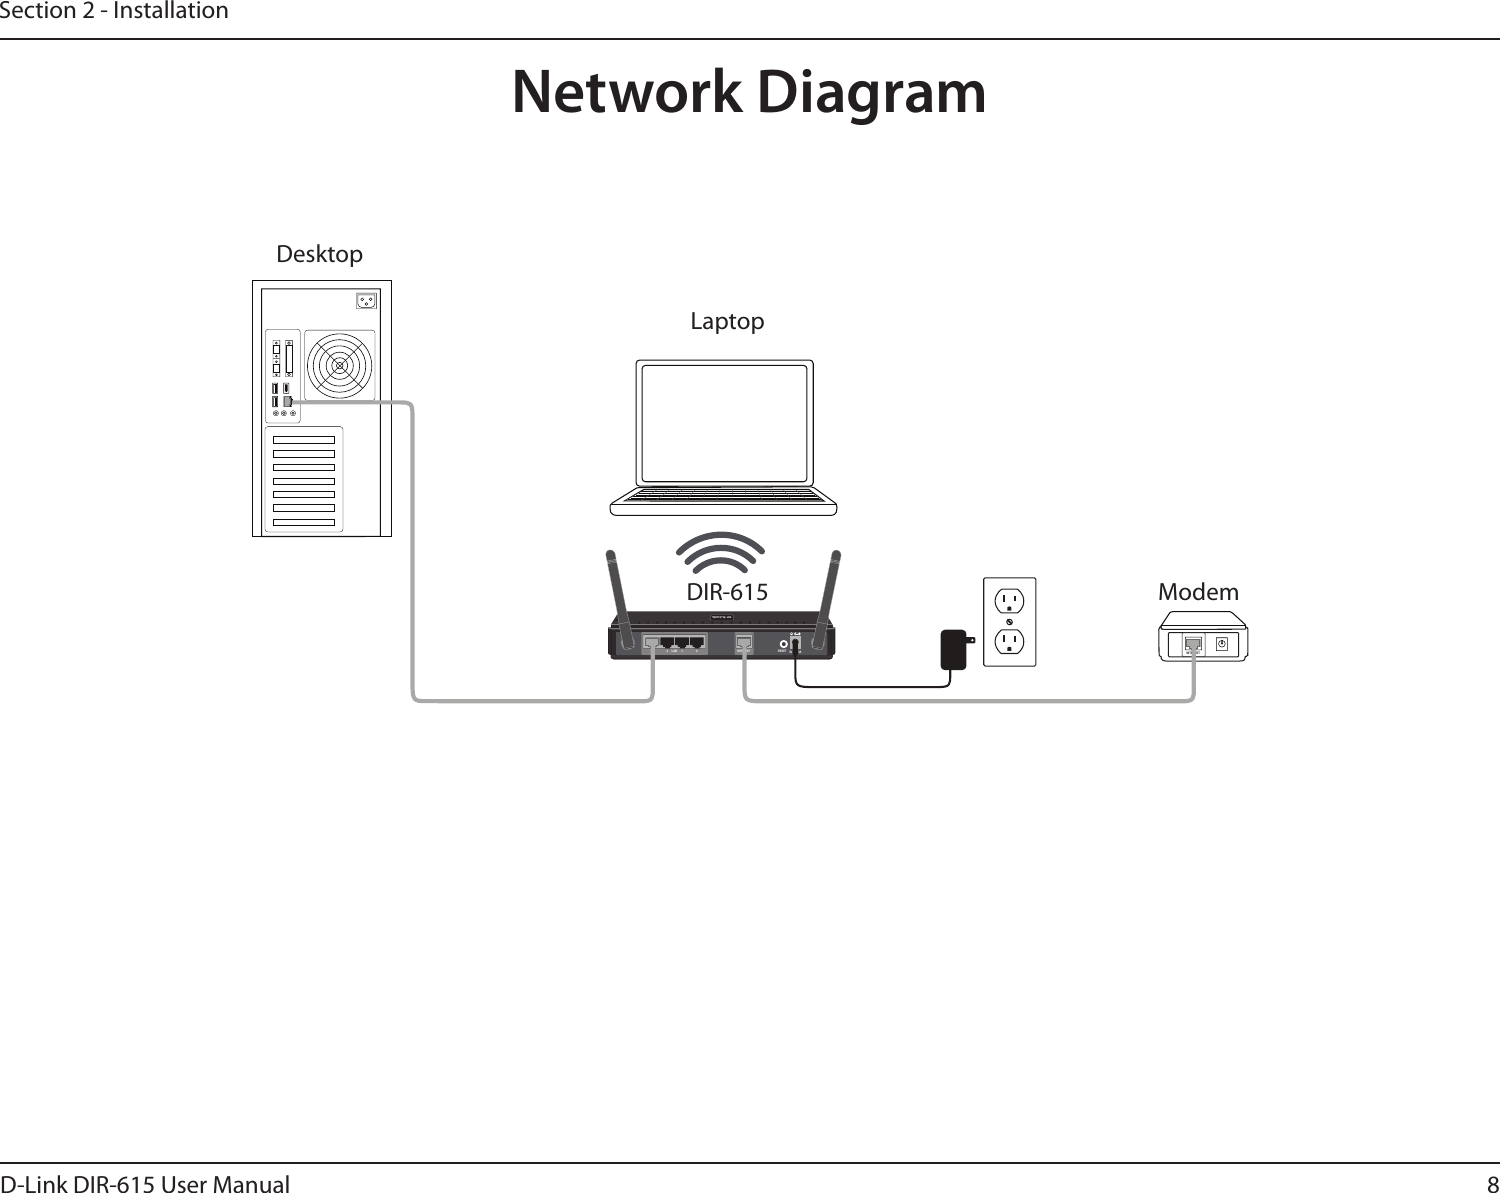 8D-Link DIR-615 User ManualSection 2 - InstallationNetwork Diagram5V ---3A1 2 LAN 3 4 INTERNET RESET INTERNETDesktopLaptopDIR-615 Modem